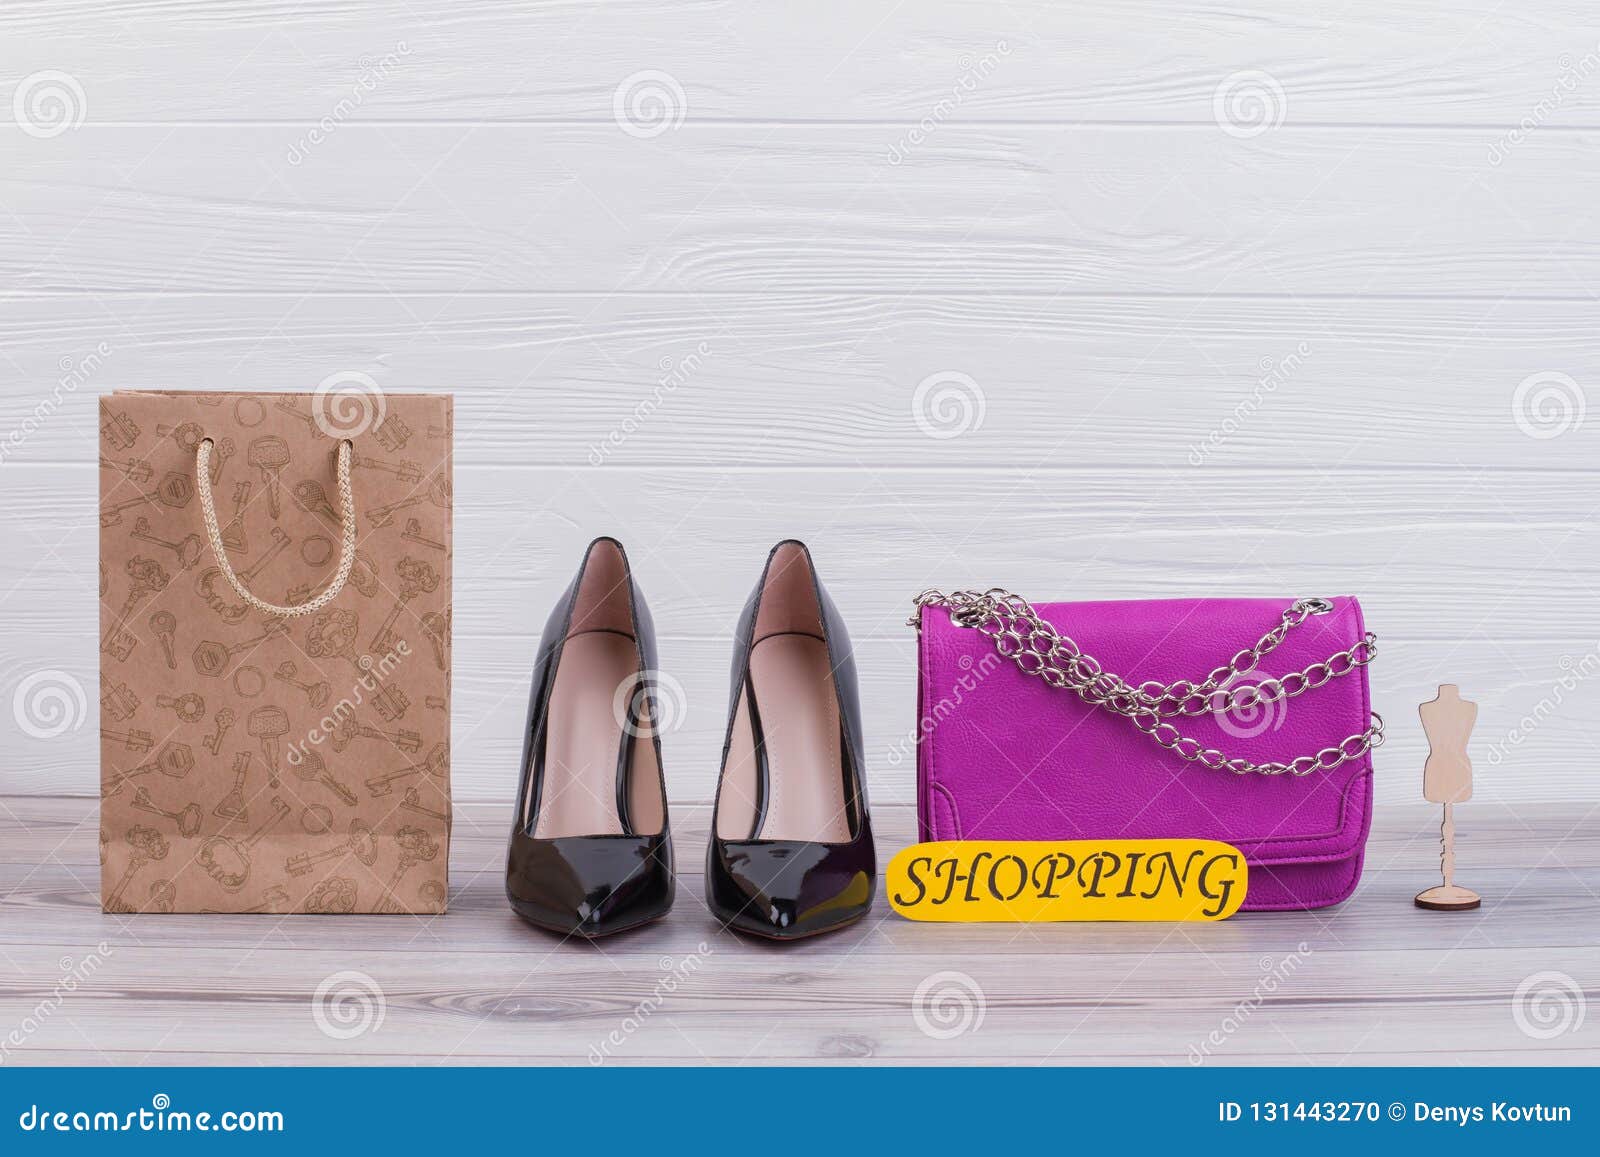 Womens Shoes, Handbag and Shopping Bag. Stock Photo - Image of figure ...